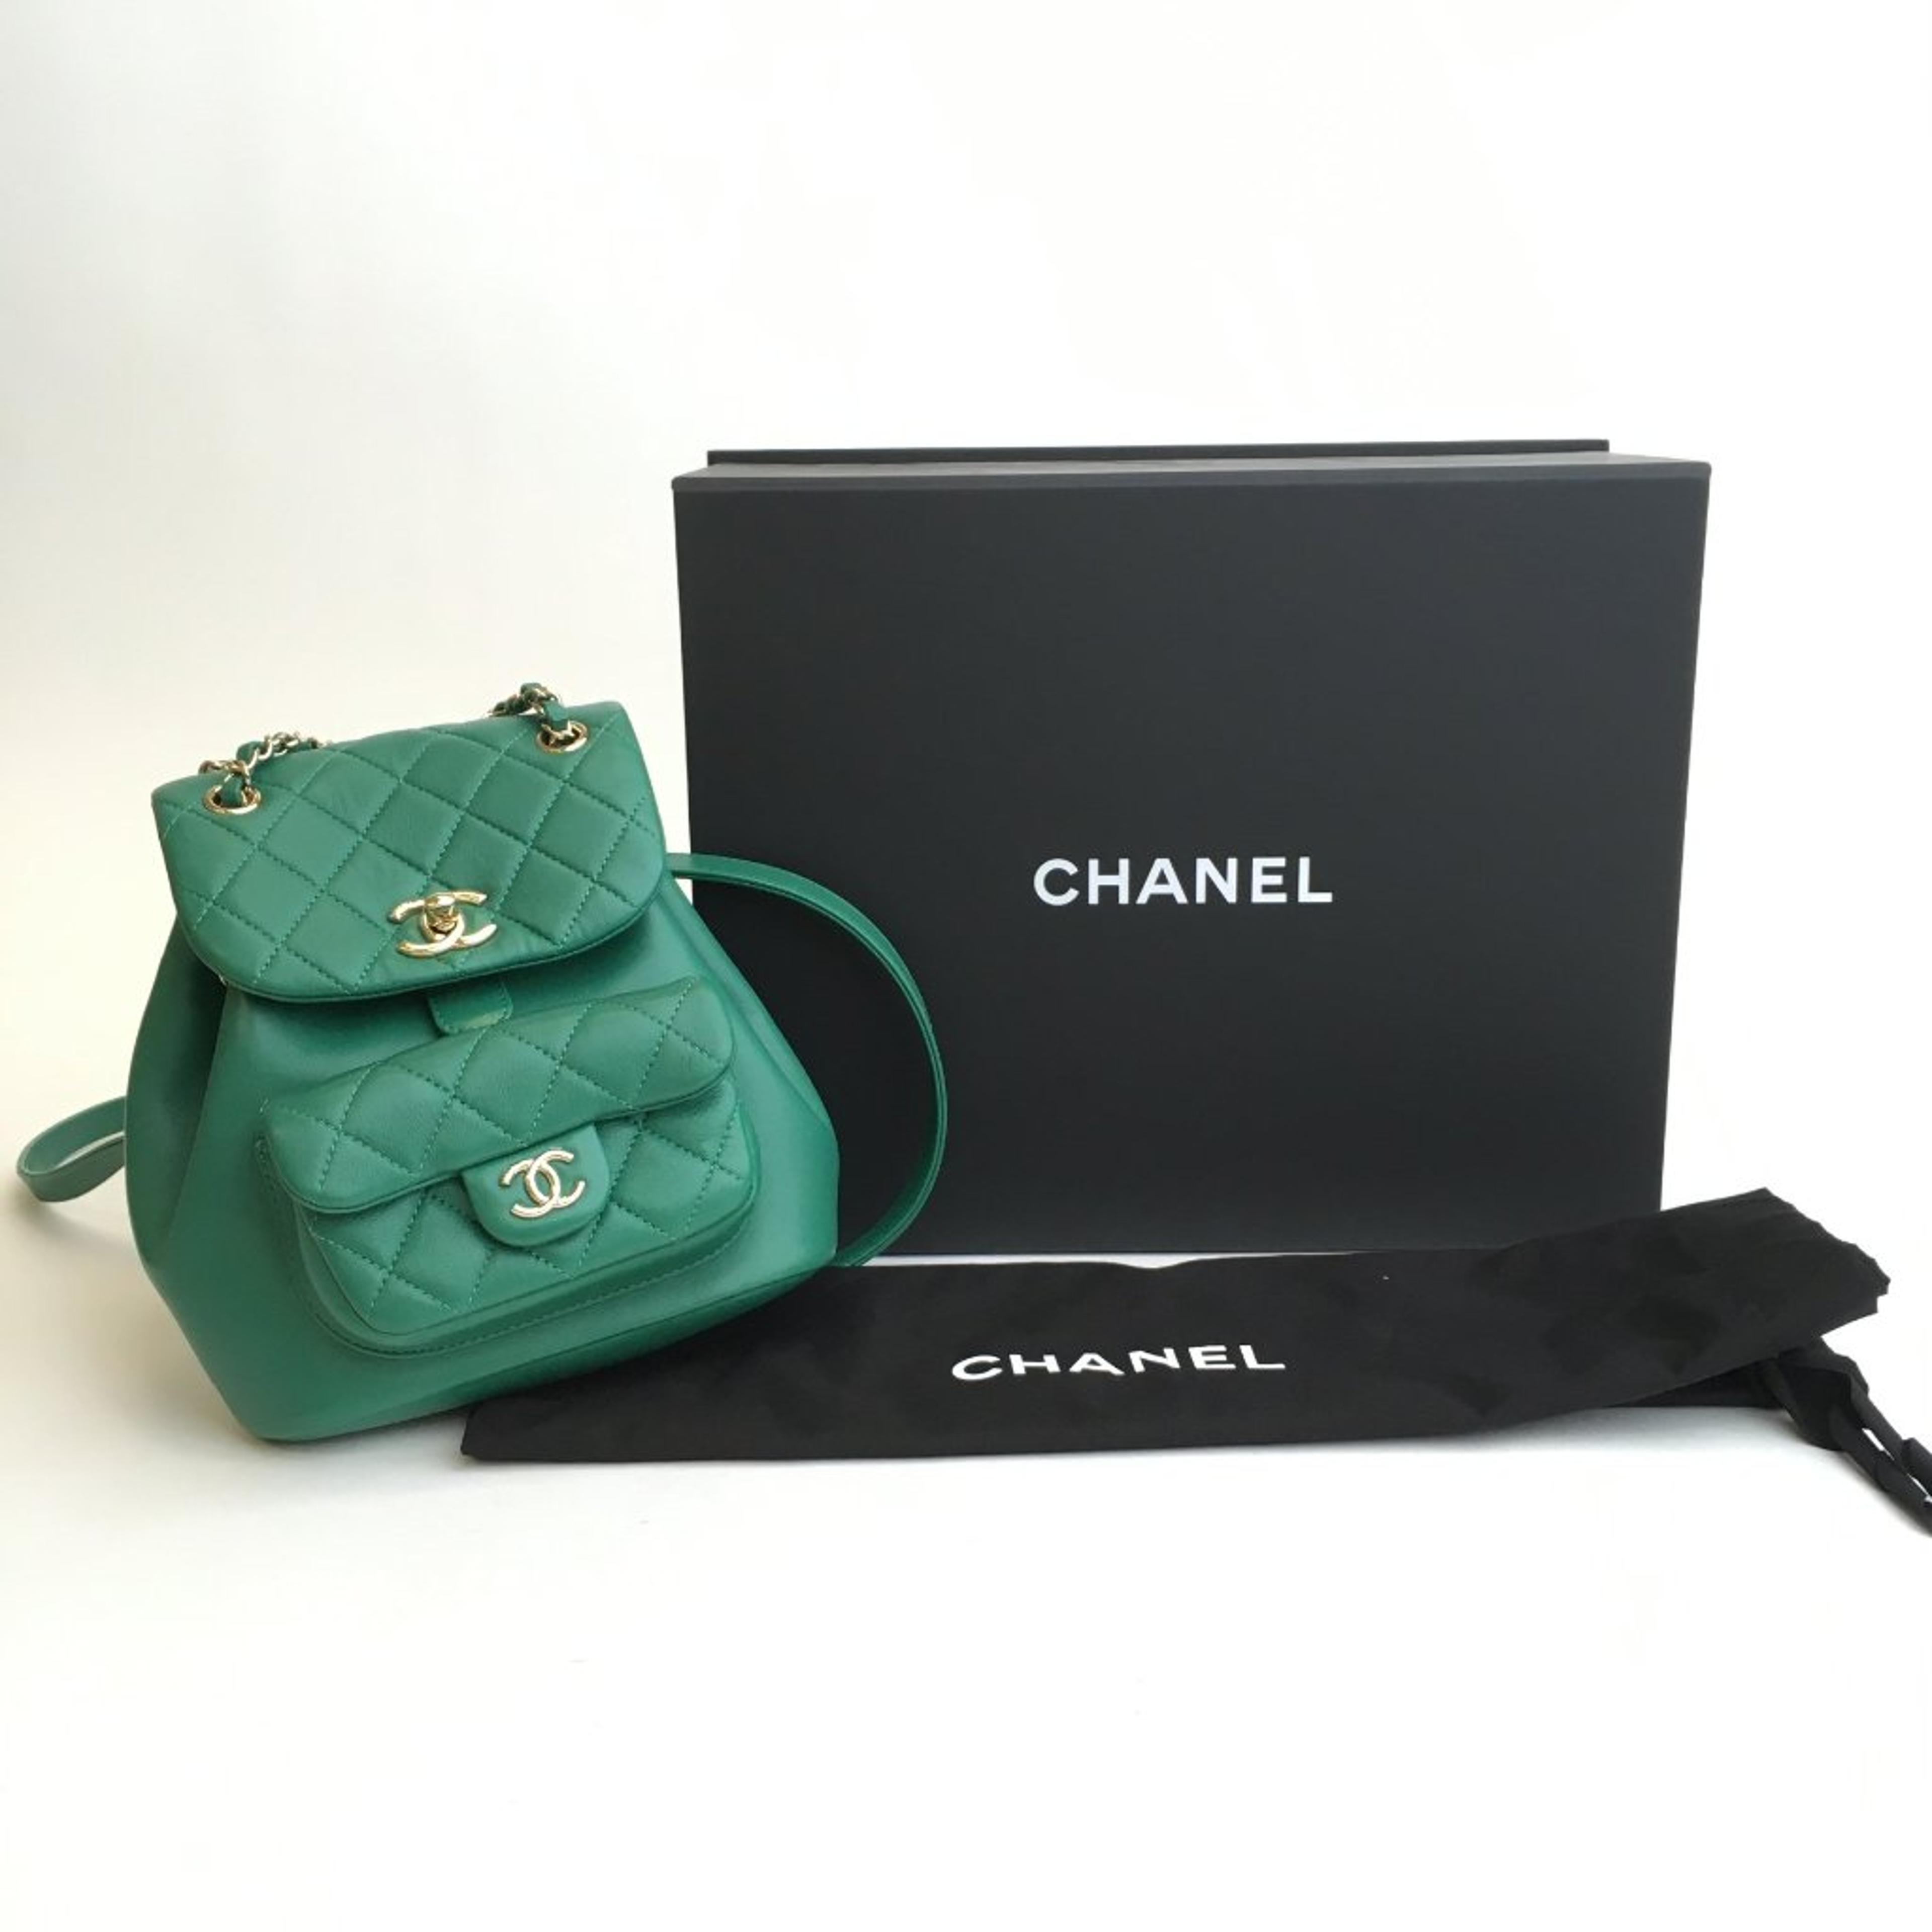 NTWRK - Chanel Duma Backpack Small